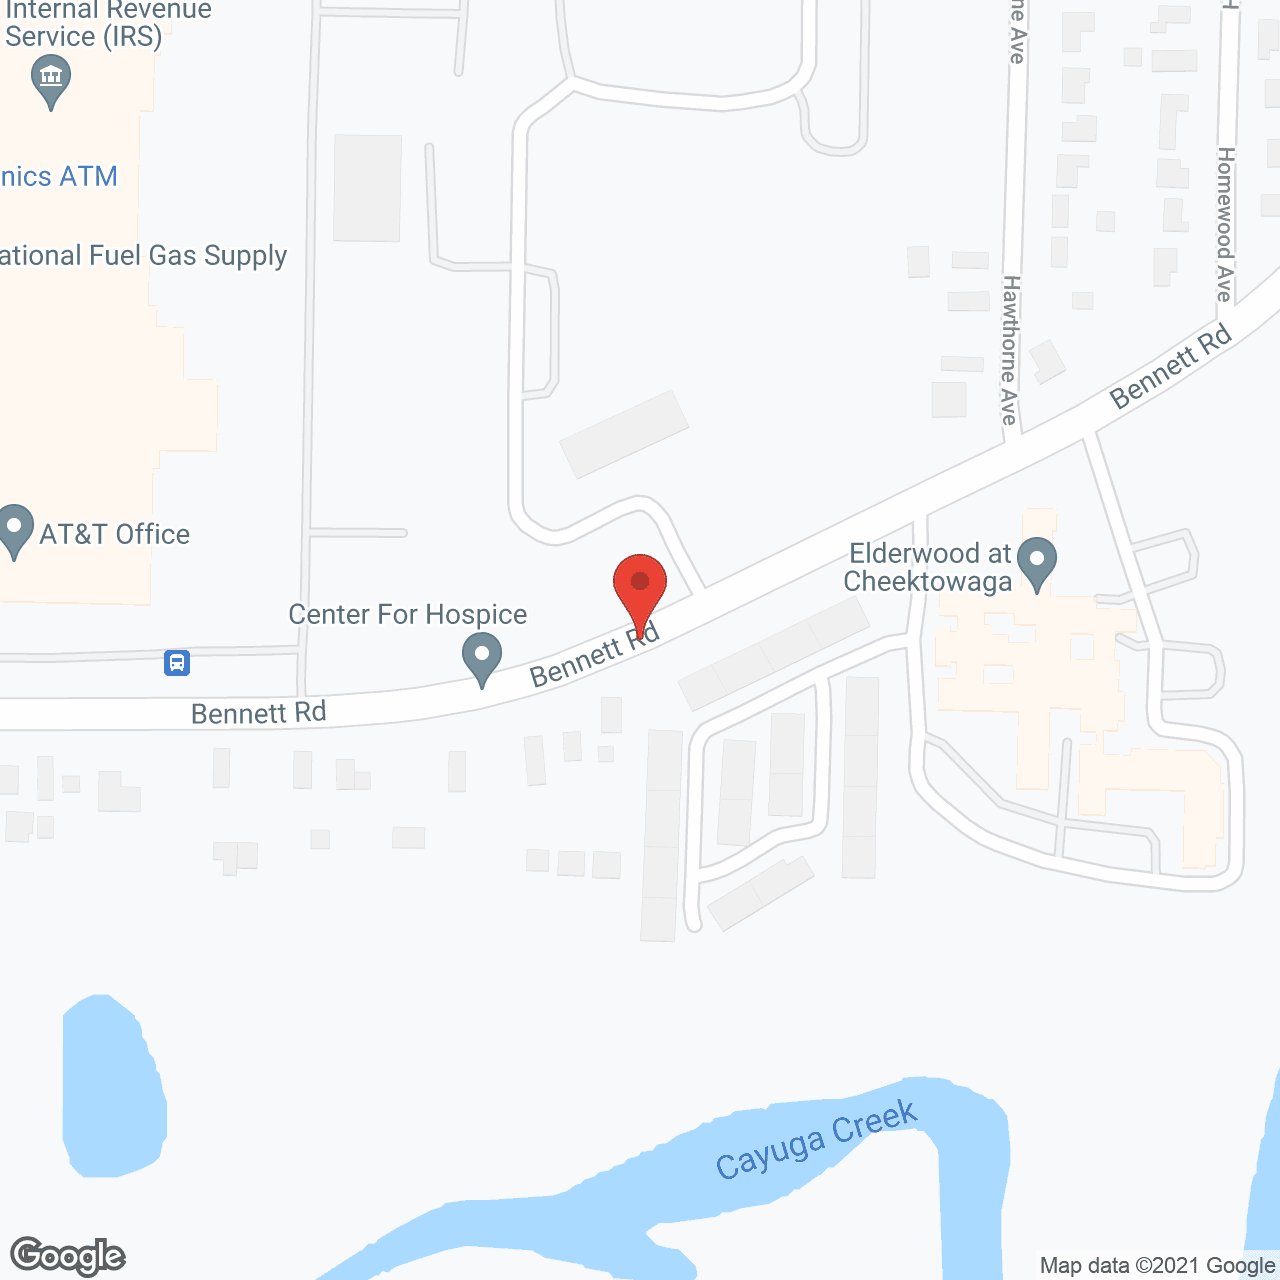 Elderwood Residences at Cheektowaga in google map